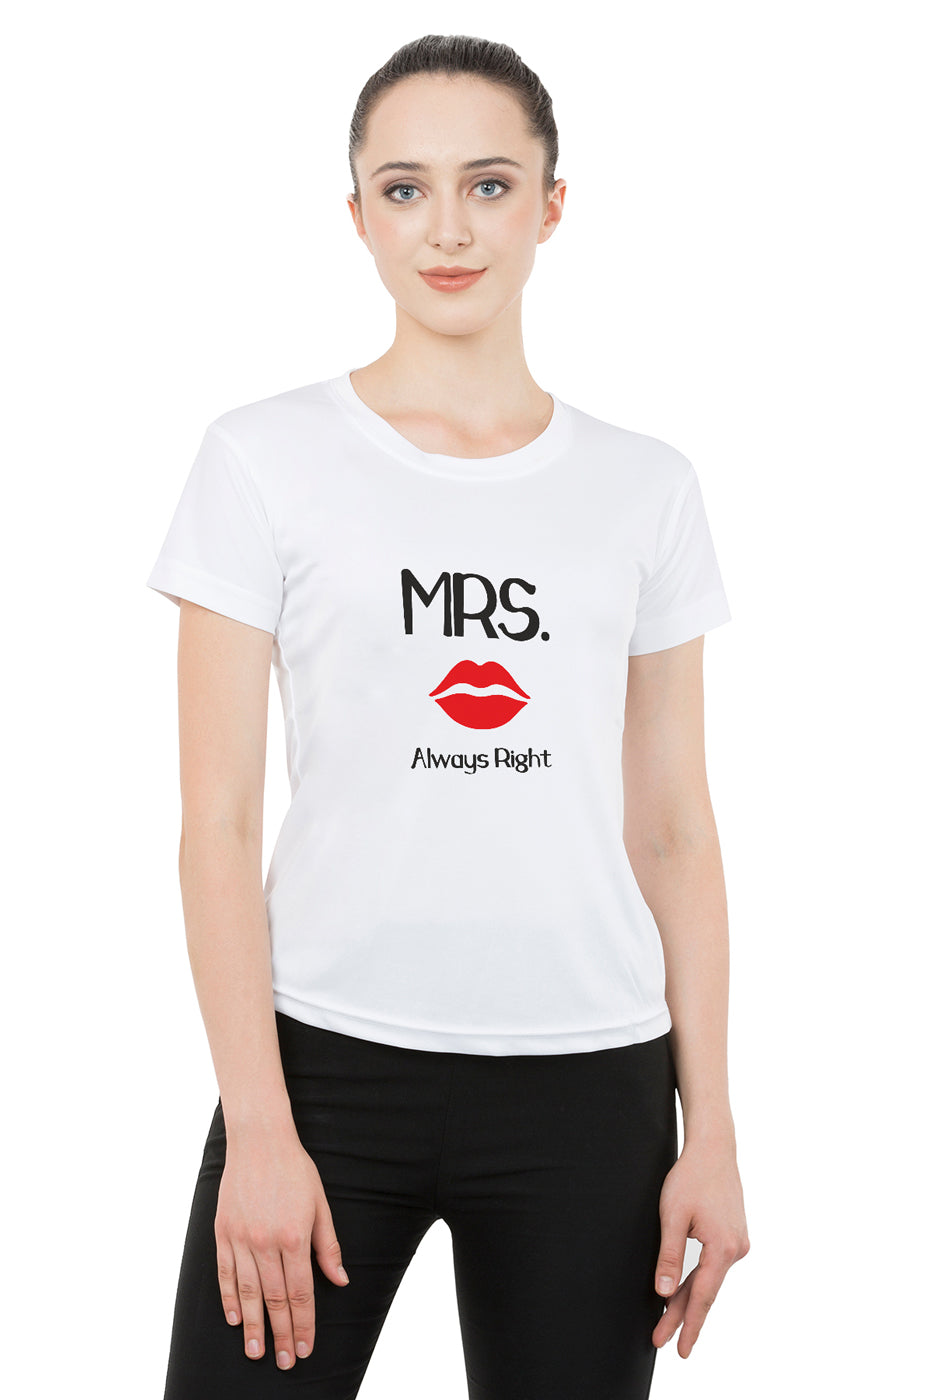 Mr. Mrs. Always Right matching Couple T shirts- White